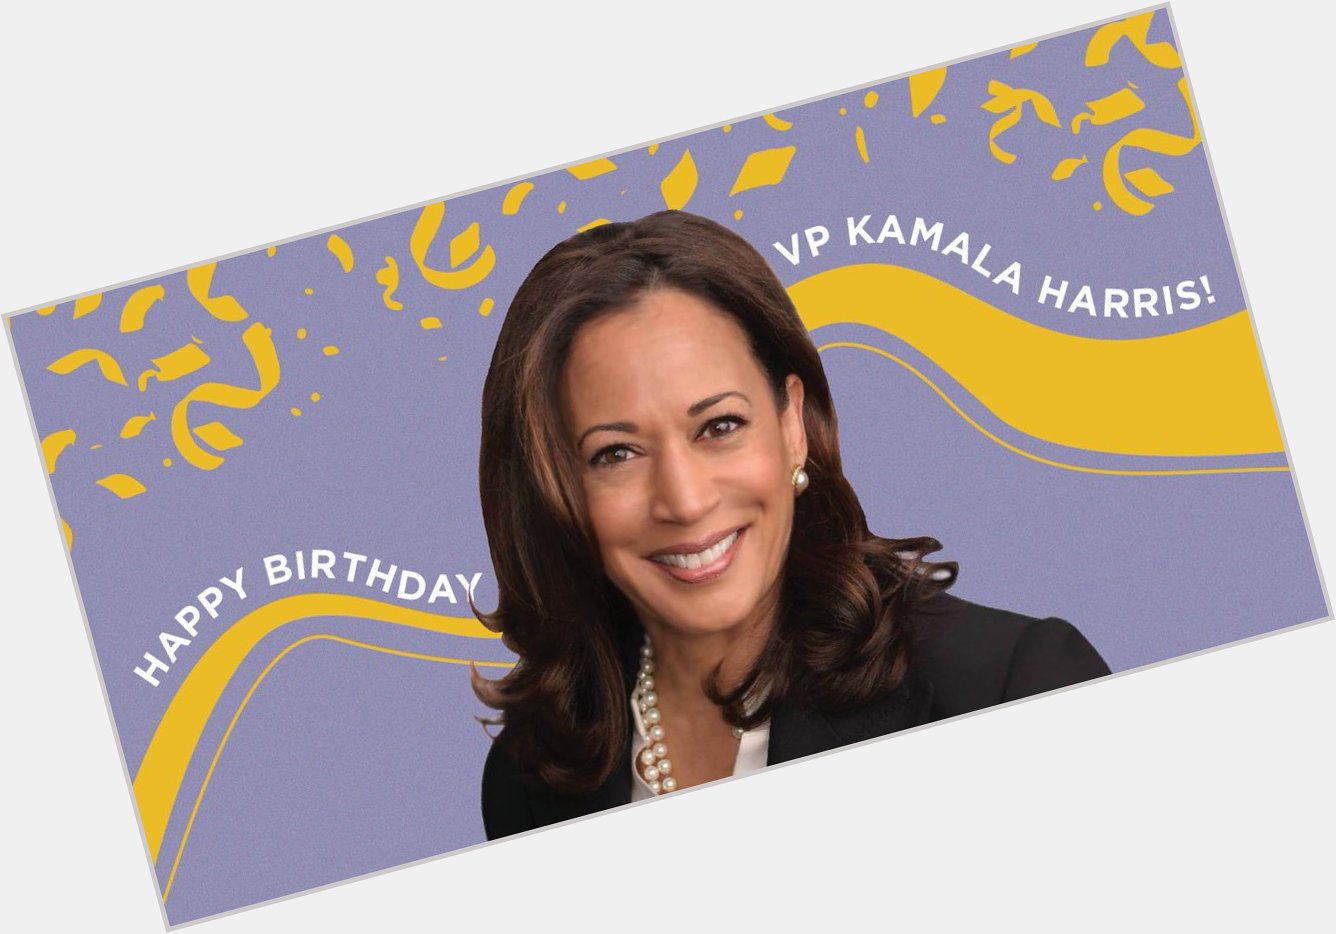 Happy birthday Kamala Harris! Wishing her a wonderful day 